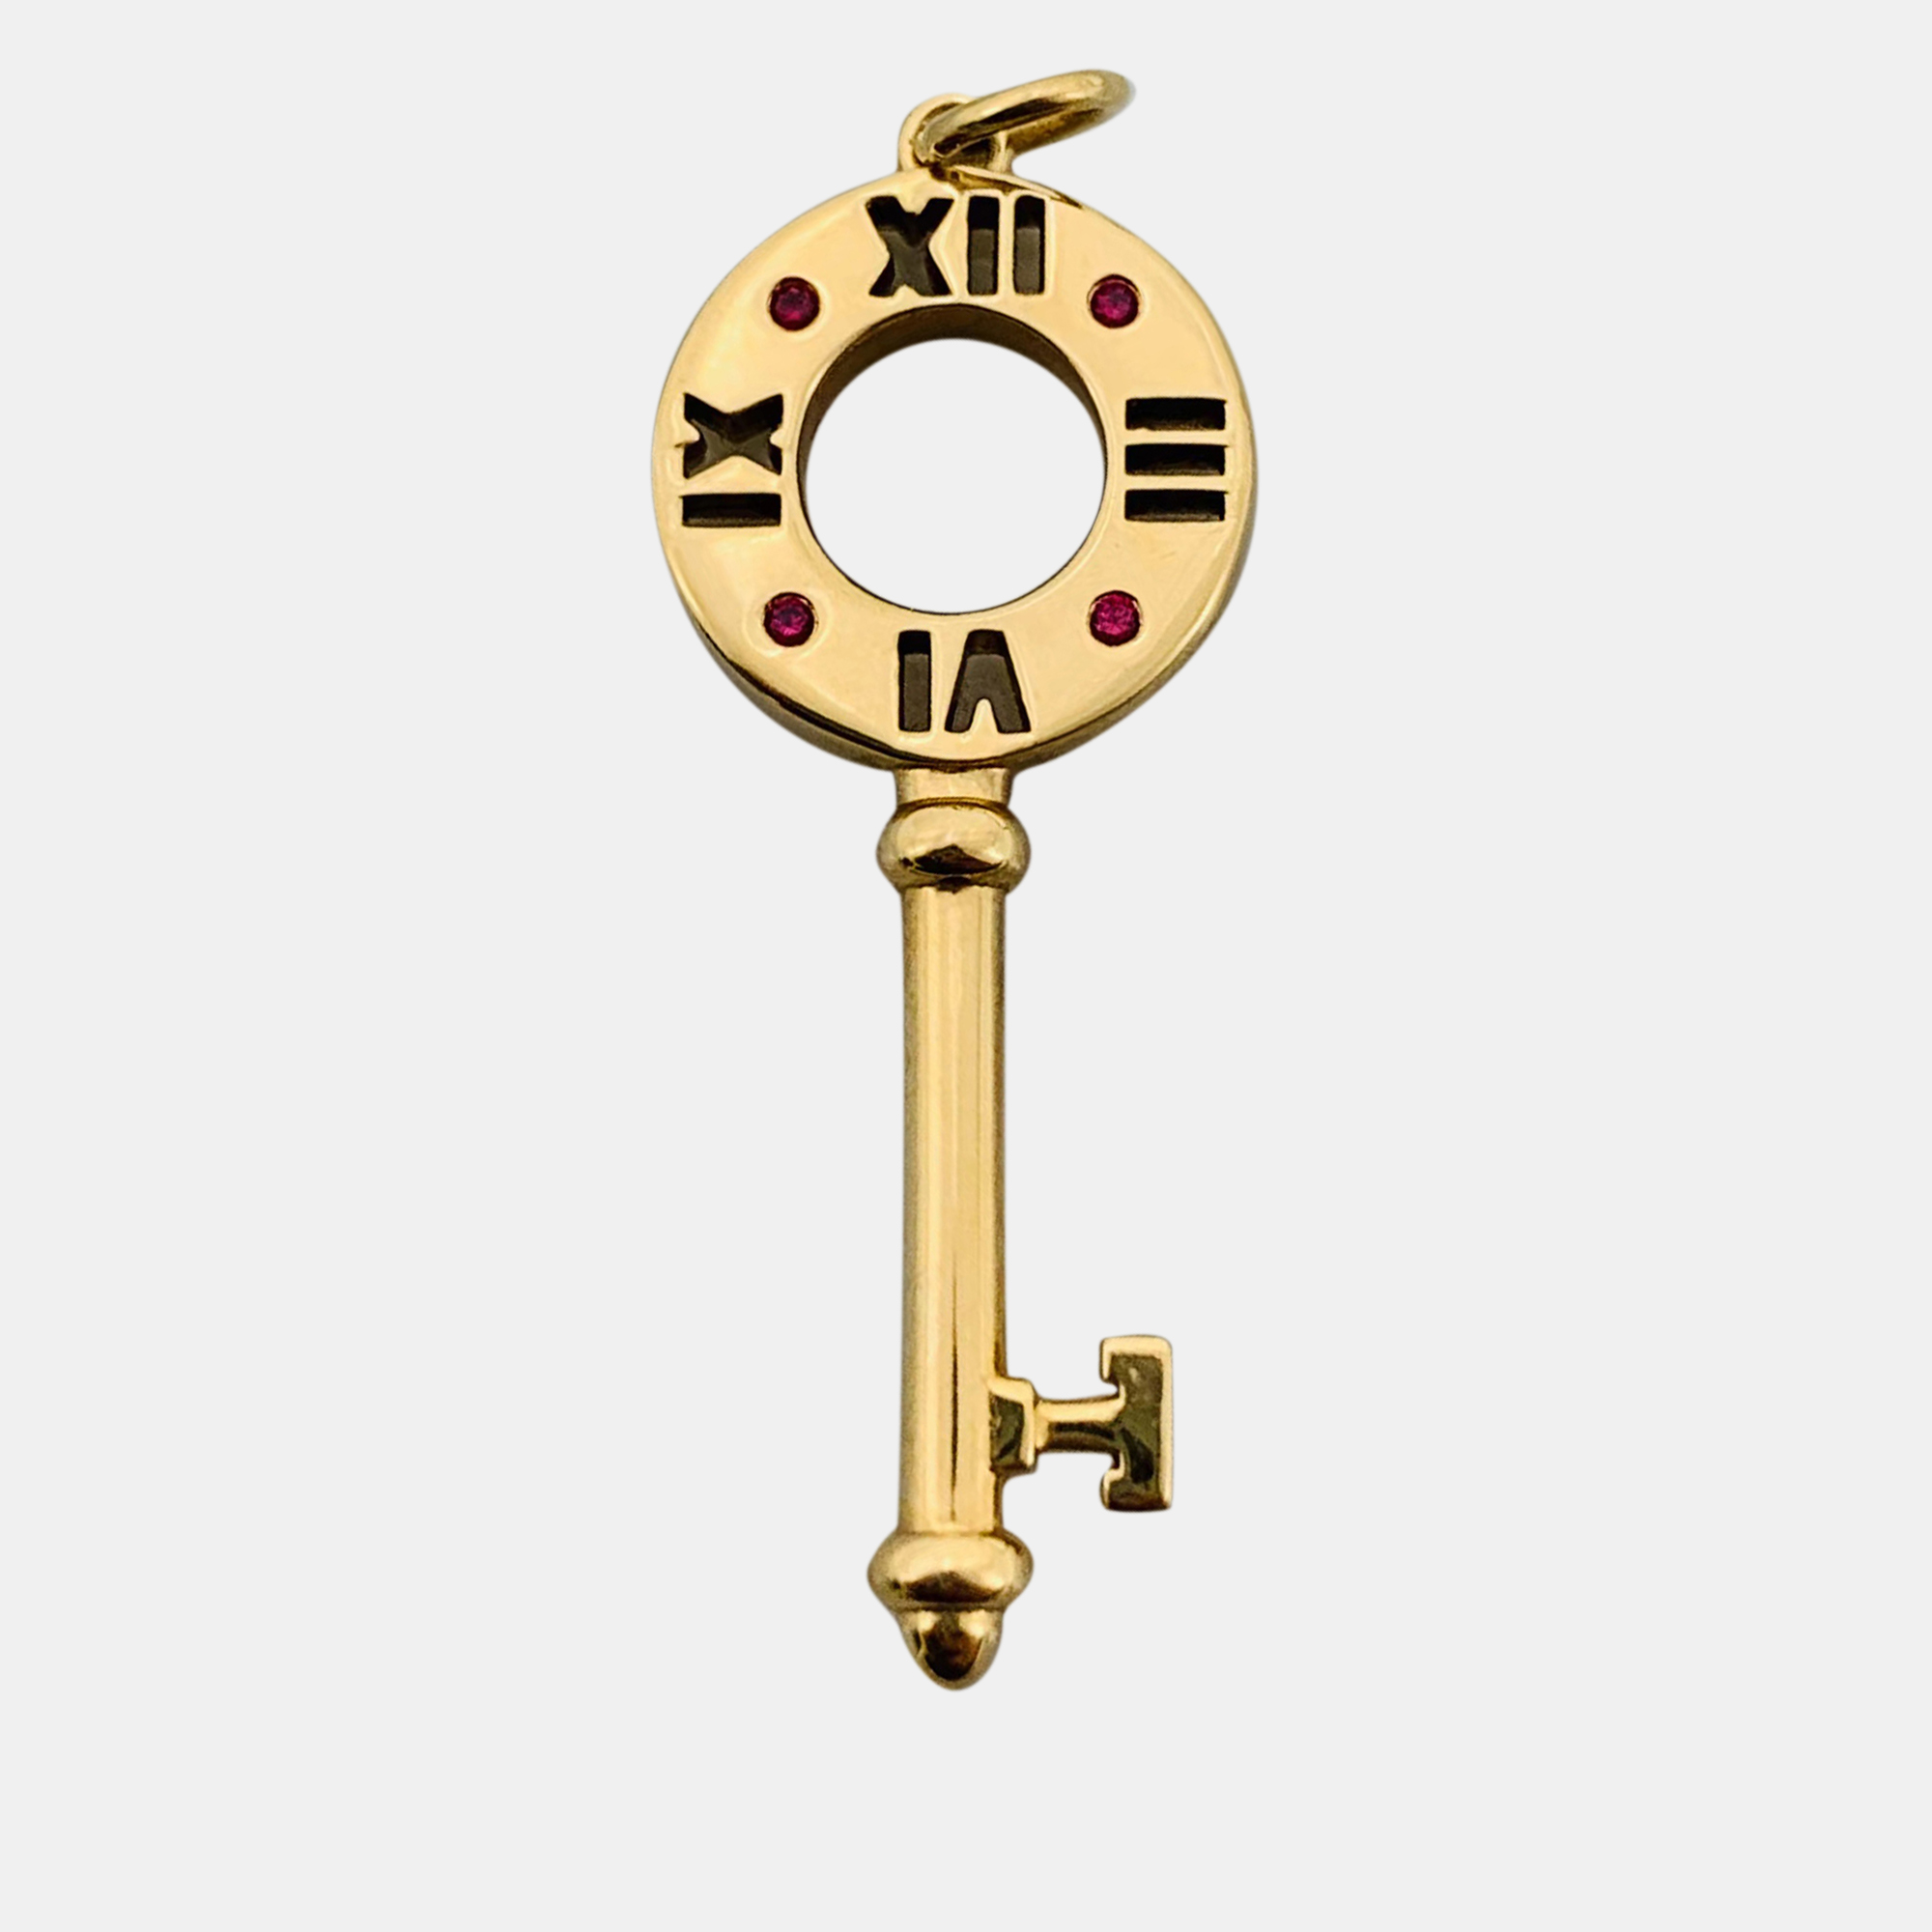 Tiffany & co. 18k yellow gold and ruby atlas pierced key pendant